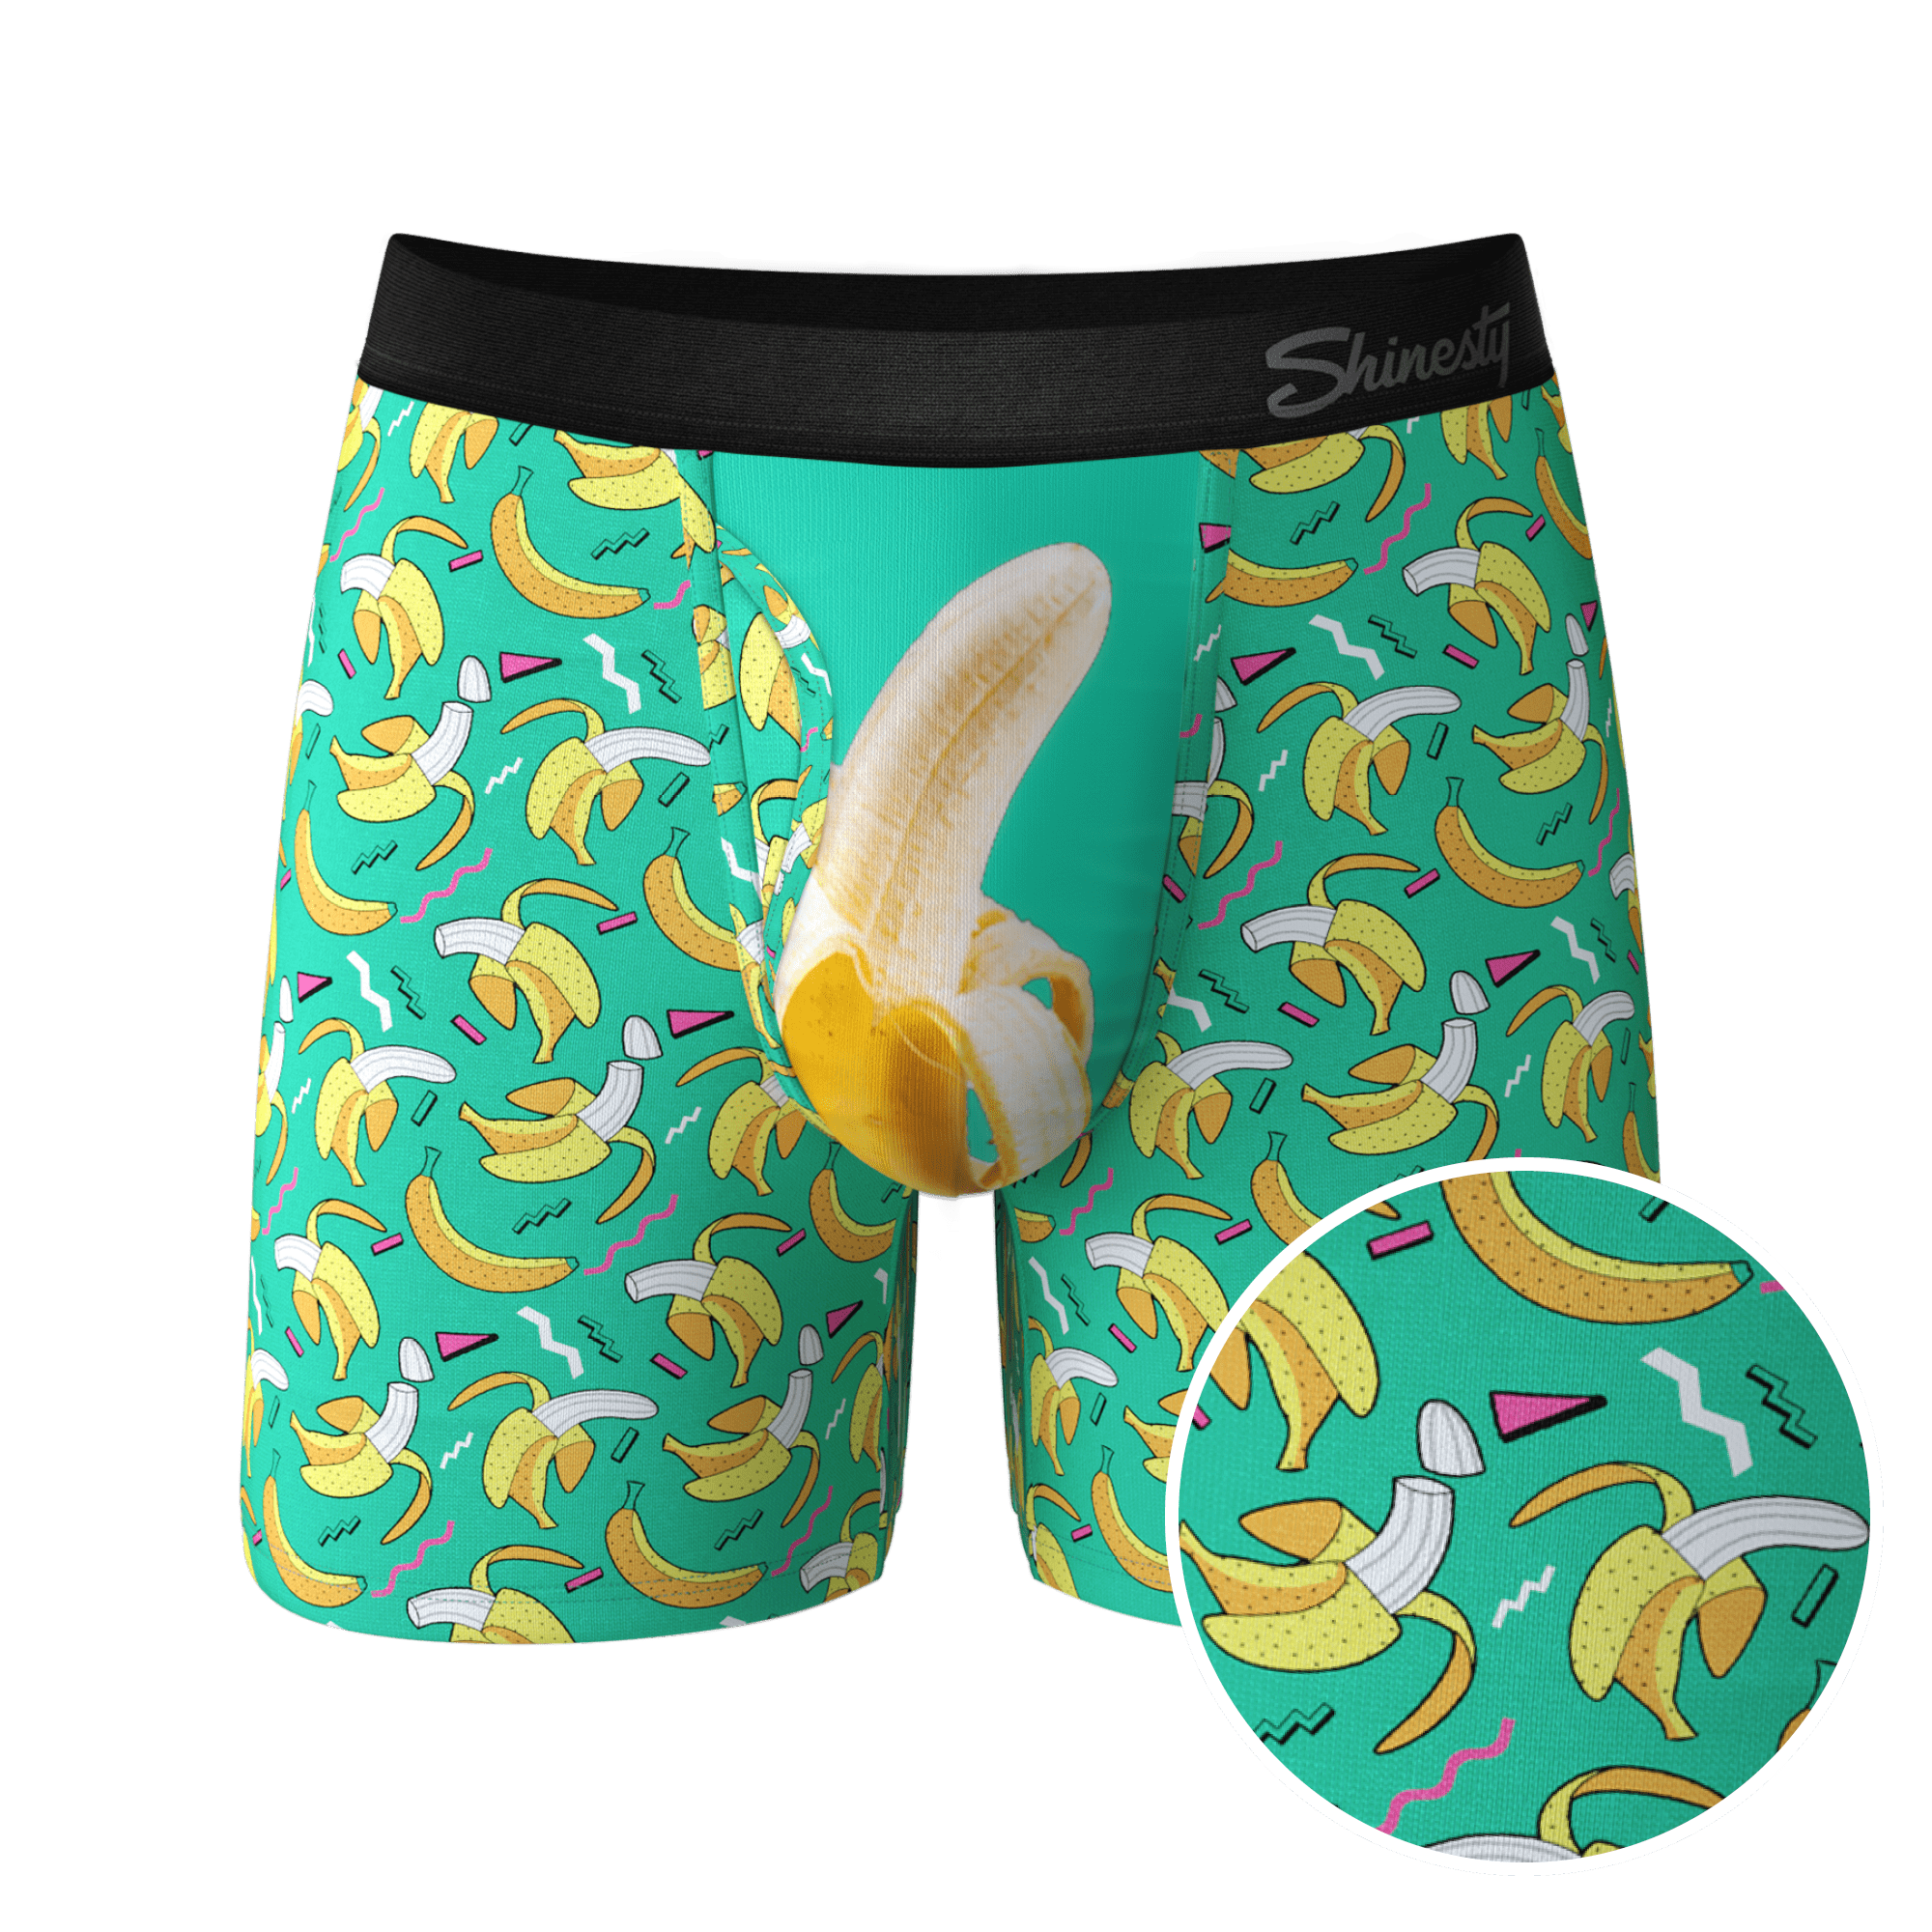 The Peel Deal - Shinesty Retro Banana Ball Hammock Pouch Underwear With Fly  2X